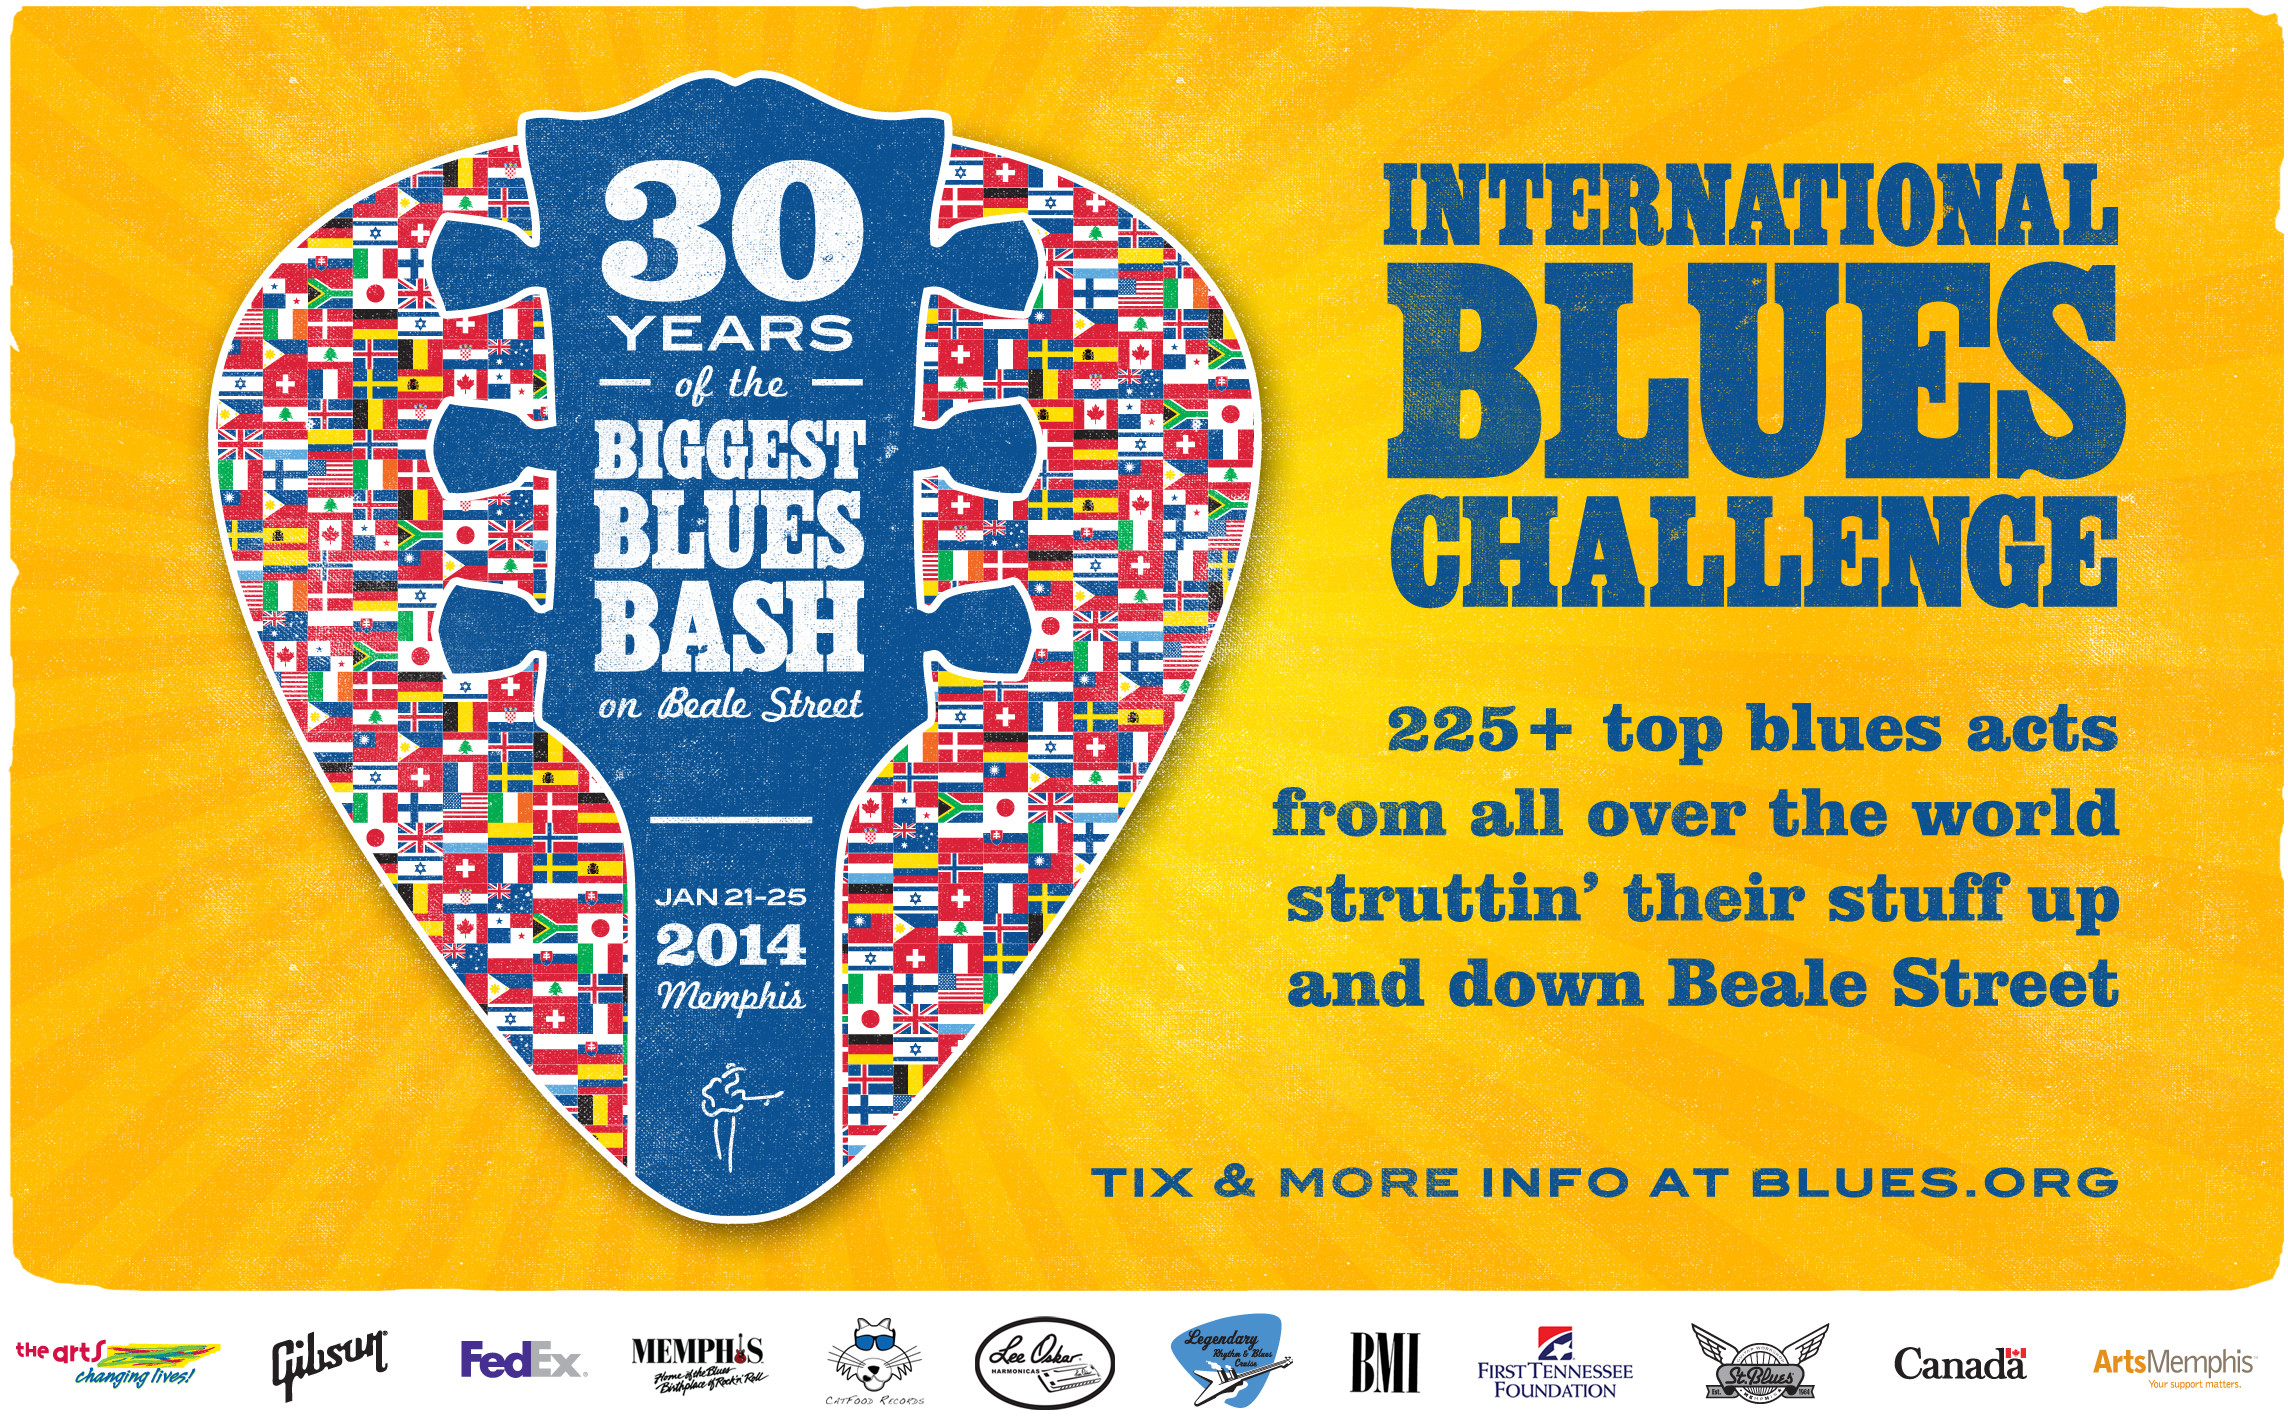 International Blues Challenge Brings Magic, History & Hundreds of Bands